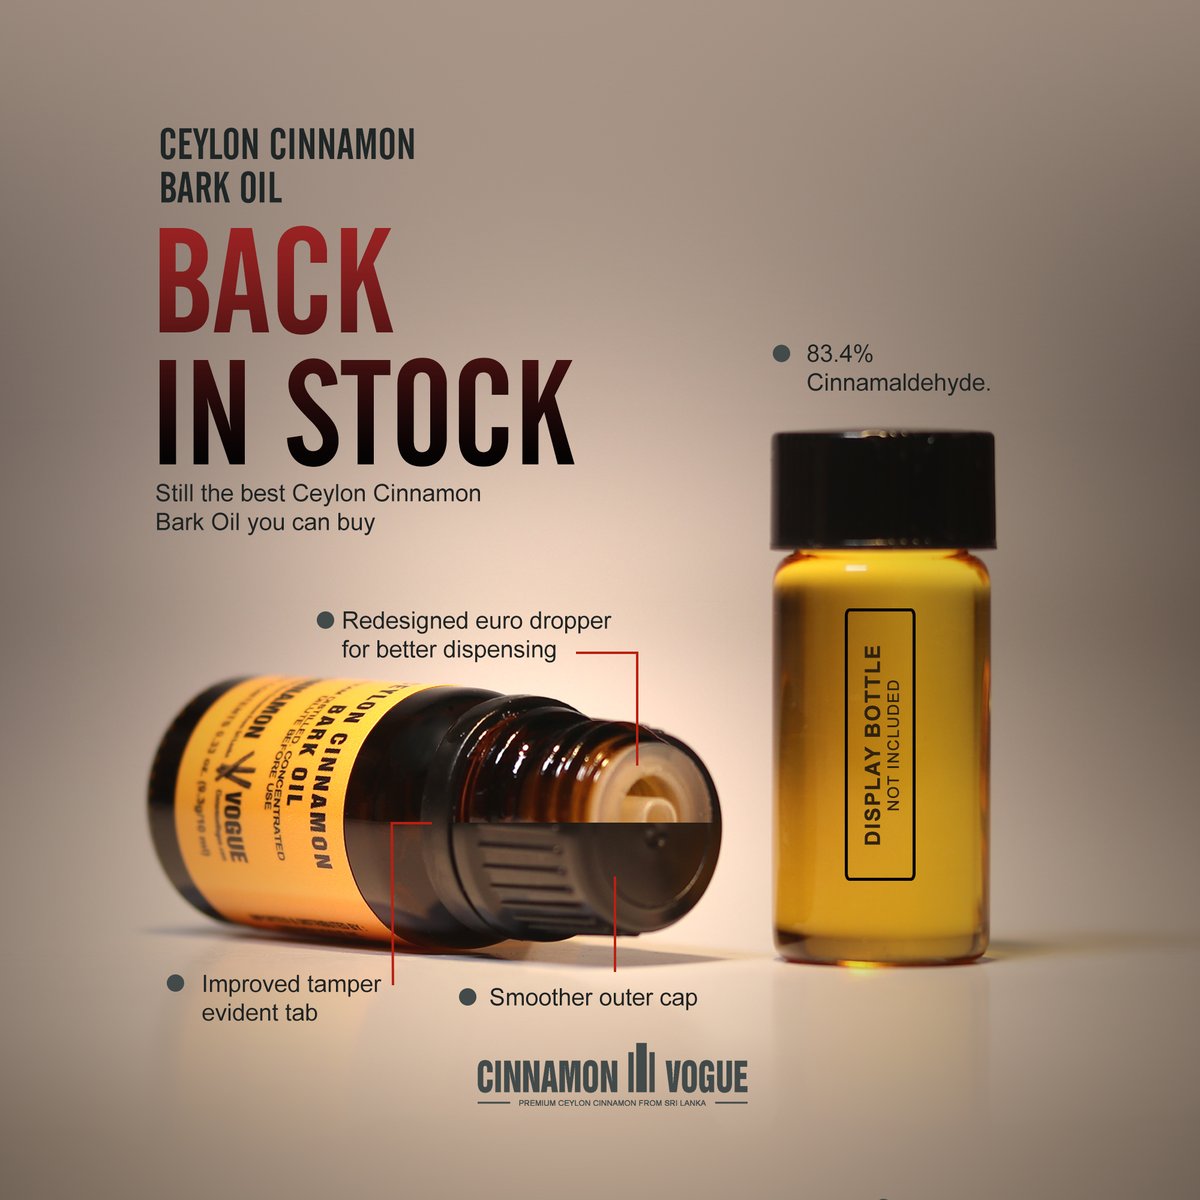 Our fabulous Ceylon Cinnamon Bark Oil is back in stock. Grab it while stocks lost. - cinnamonvogue.com/ceylon_cinnamo…
#cinnamonoil #ceyloncinnamonbarkoil #essentialoil #ceyloncinnamon #type2diabetes #candida #bloodsugar #cinnamaldehyde #stomachflu #depression #moodenhancer